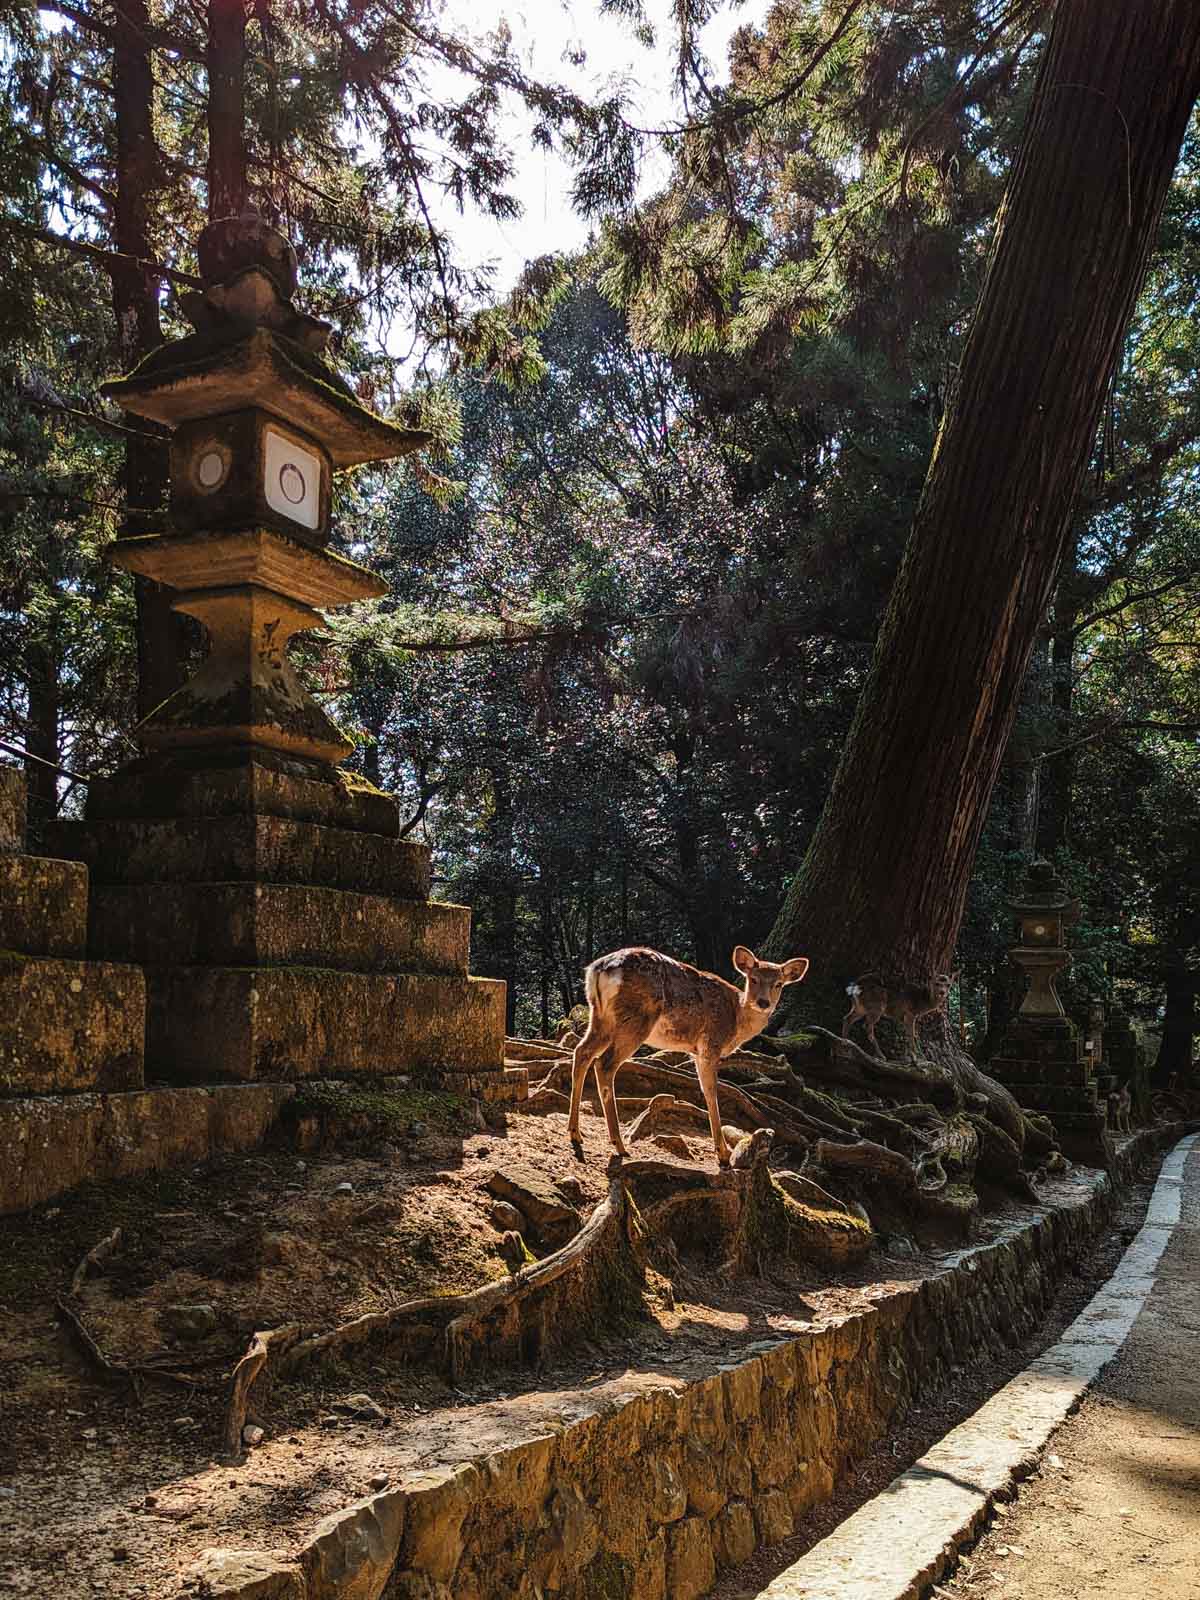 Small deer illuminated by sunlight beneath tall trees and stone lantern in Nara Park.